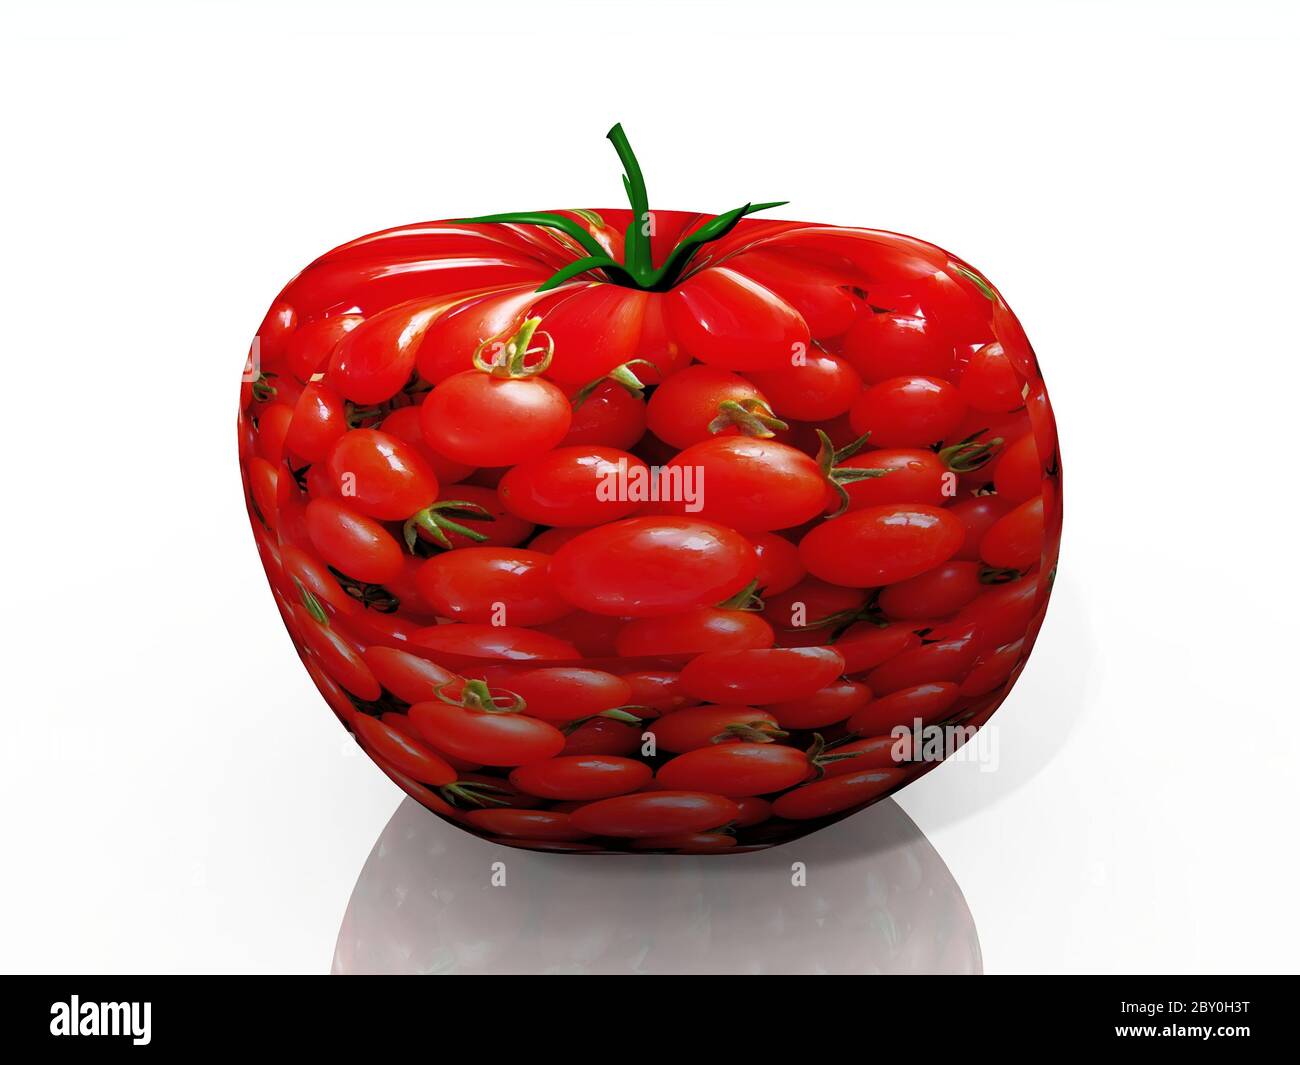 a tomato with a tomato texture Stock Photo